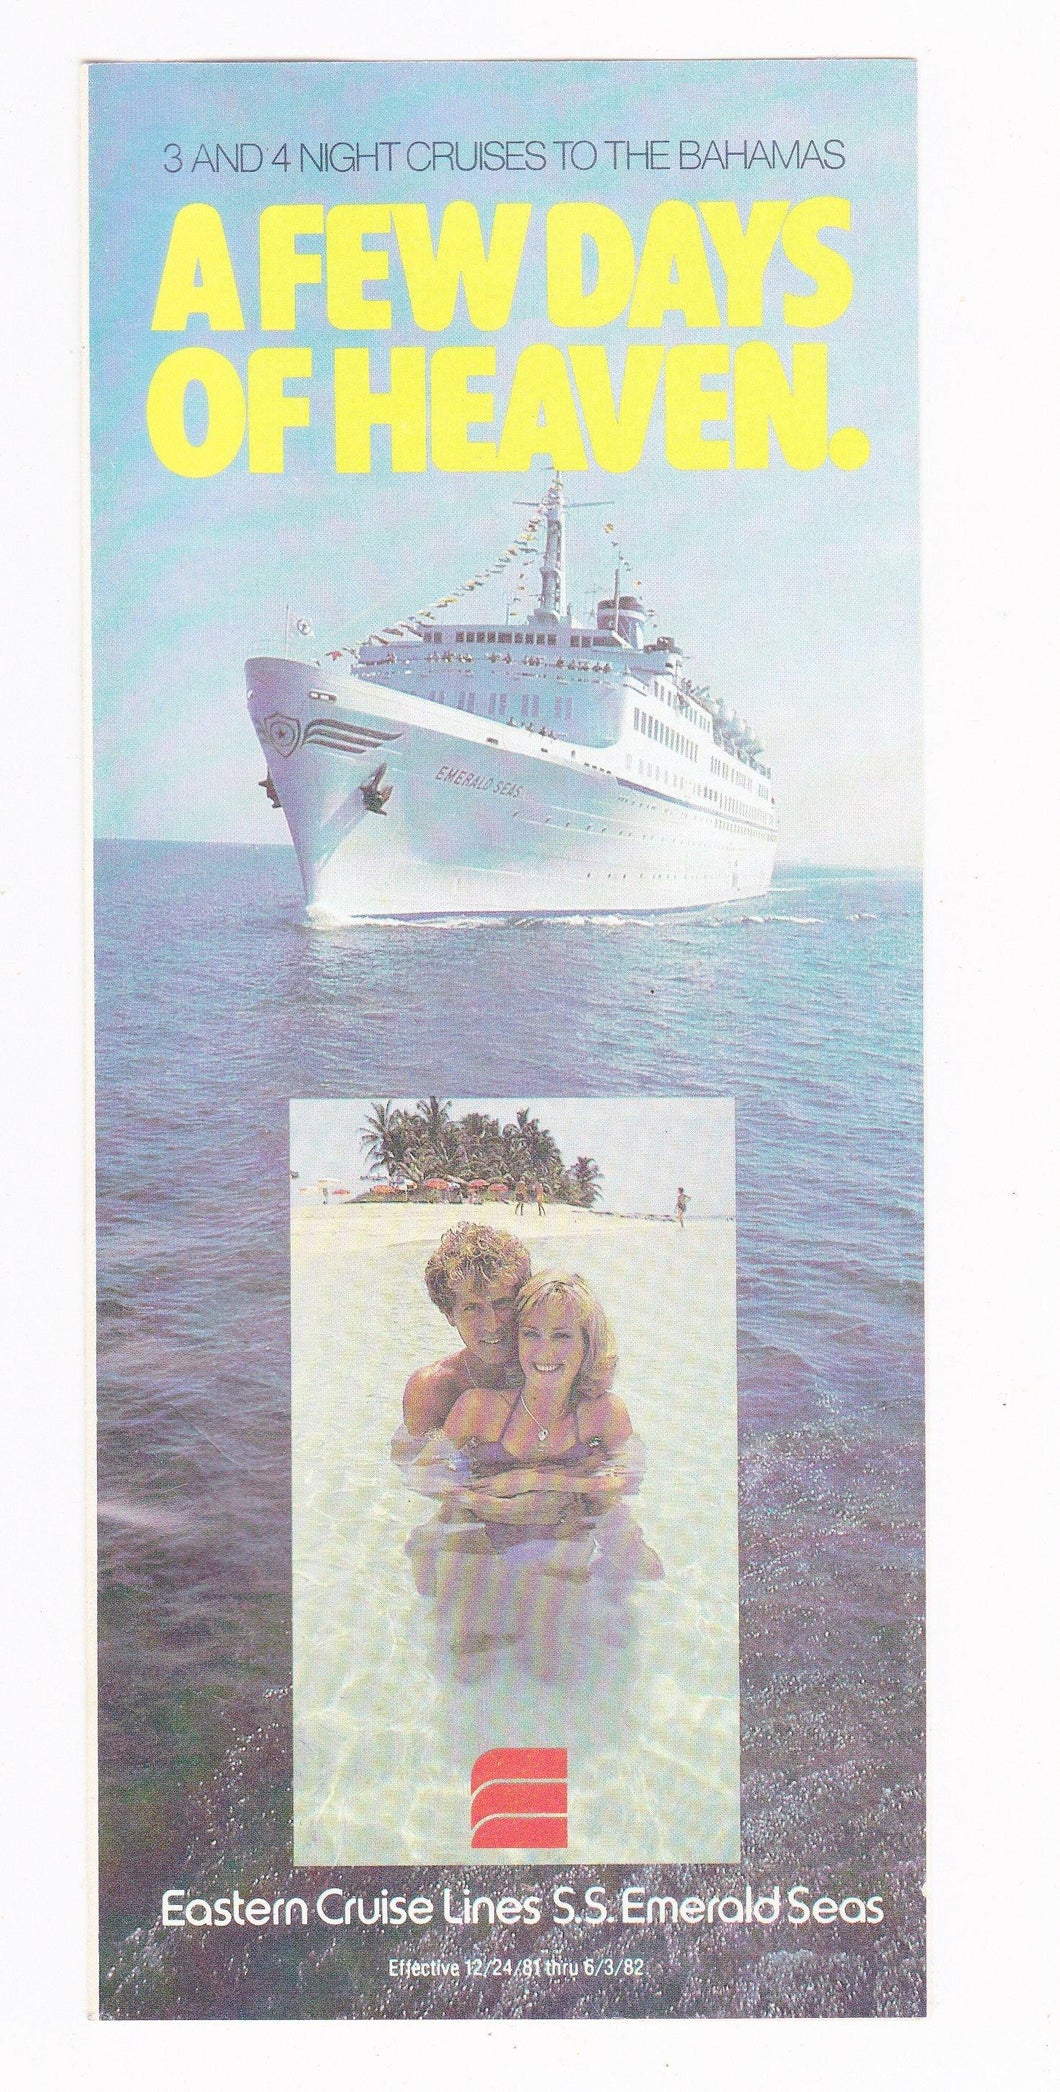 Eastern Cruise Lines ss Emerald Seas 1981-1982 Bahamas Cruises Brochure - TulipStuff